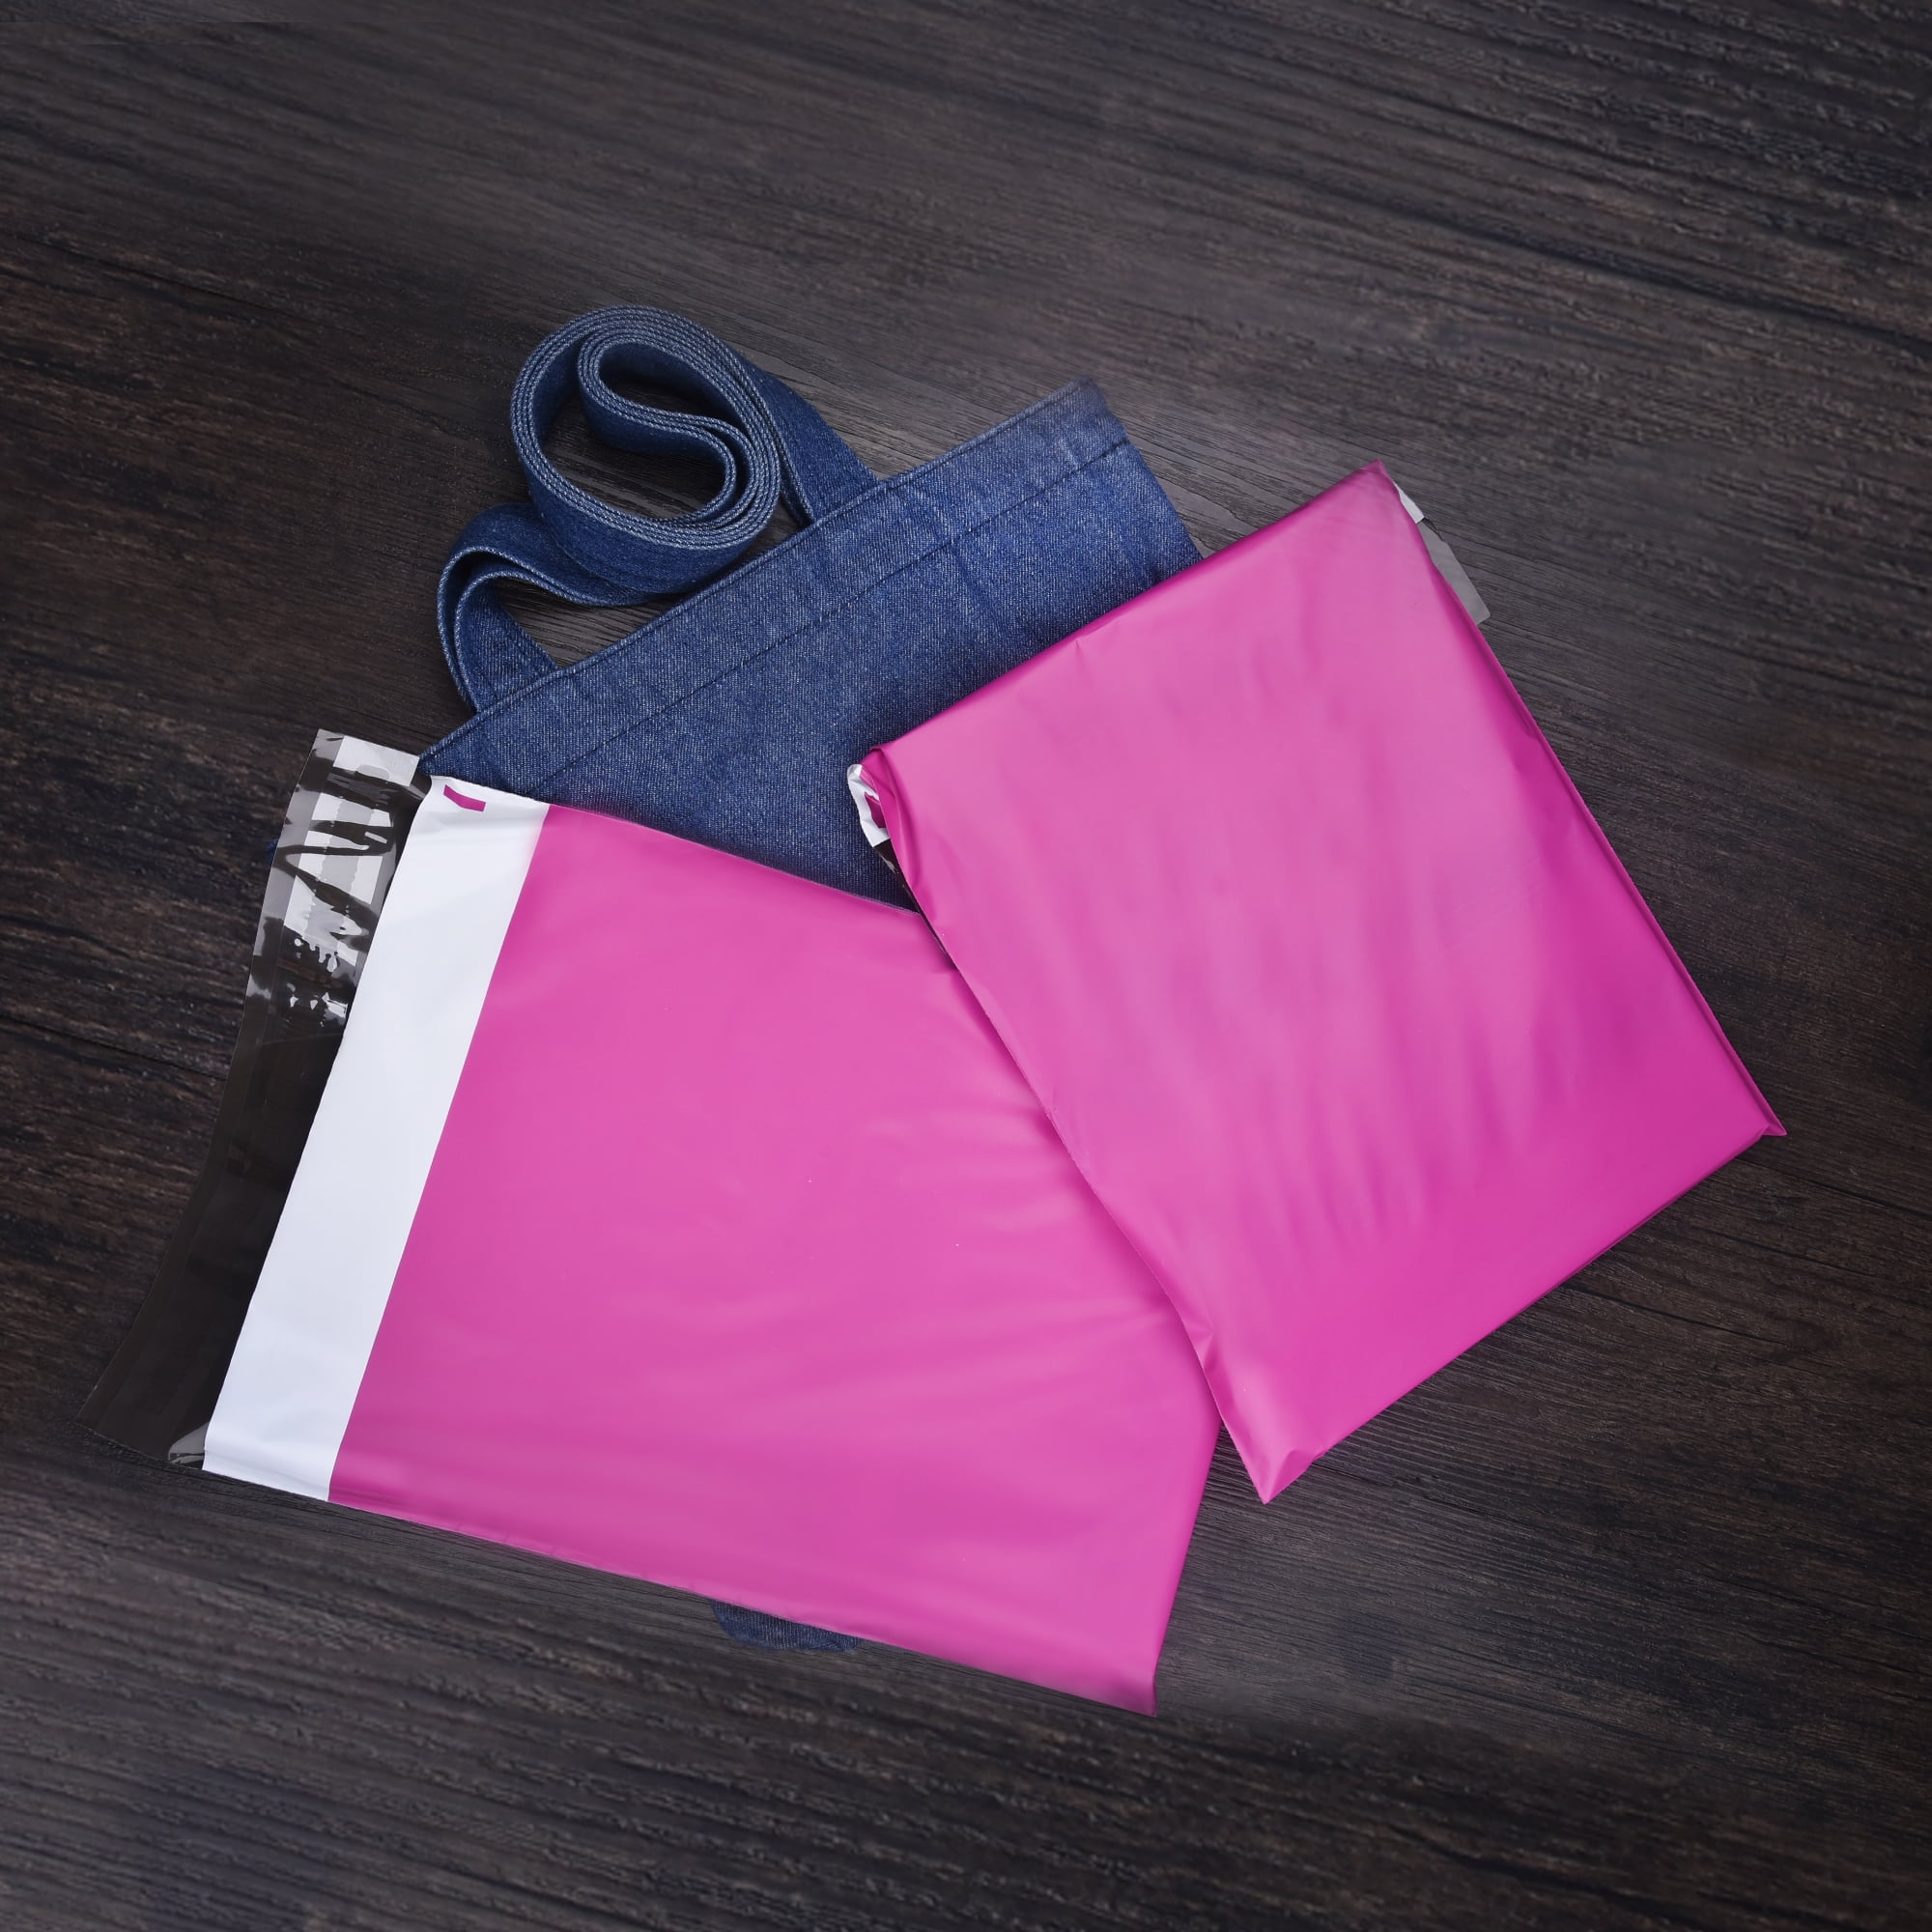 KKBESTPACK 100 10x13 Pink Poly Mailers Self Sealing Shipping Envelopes Waterproof Postal Bags